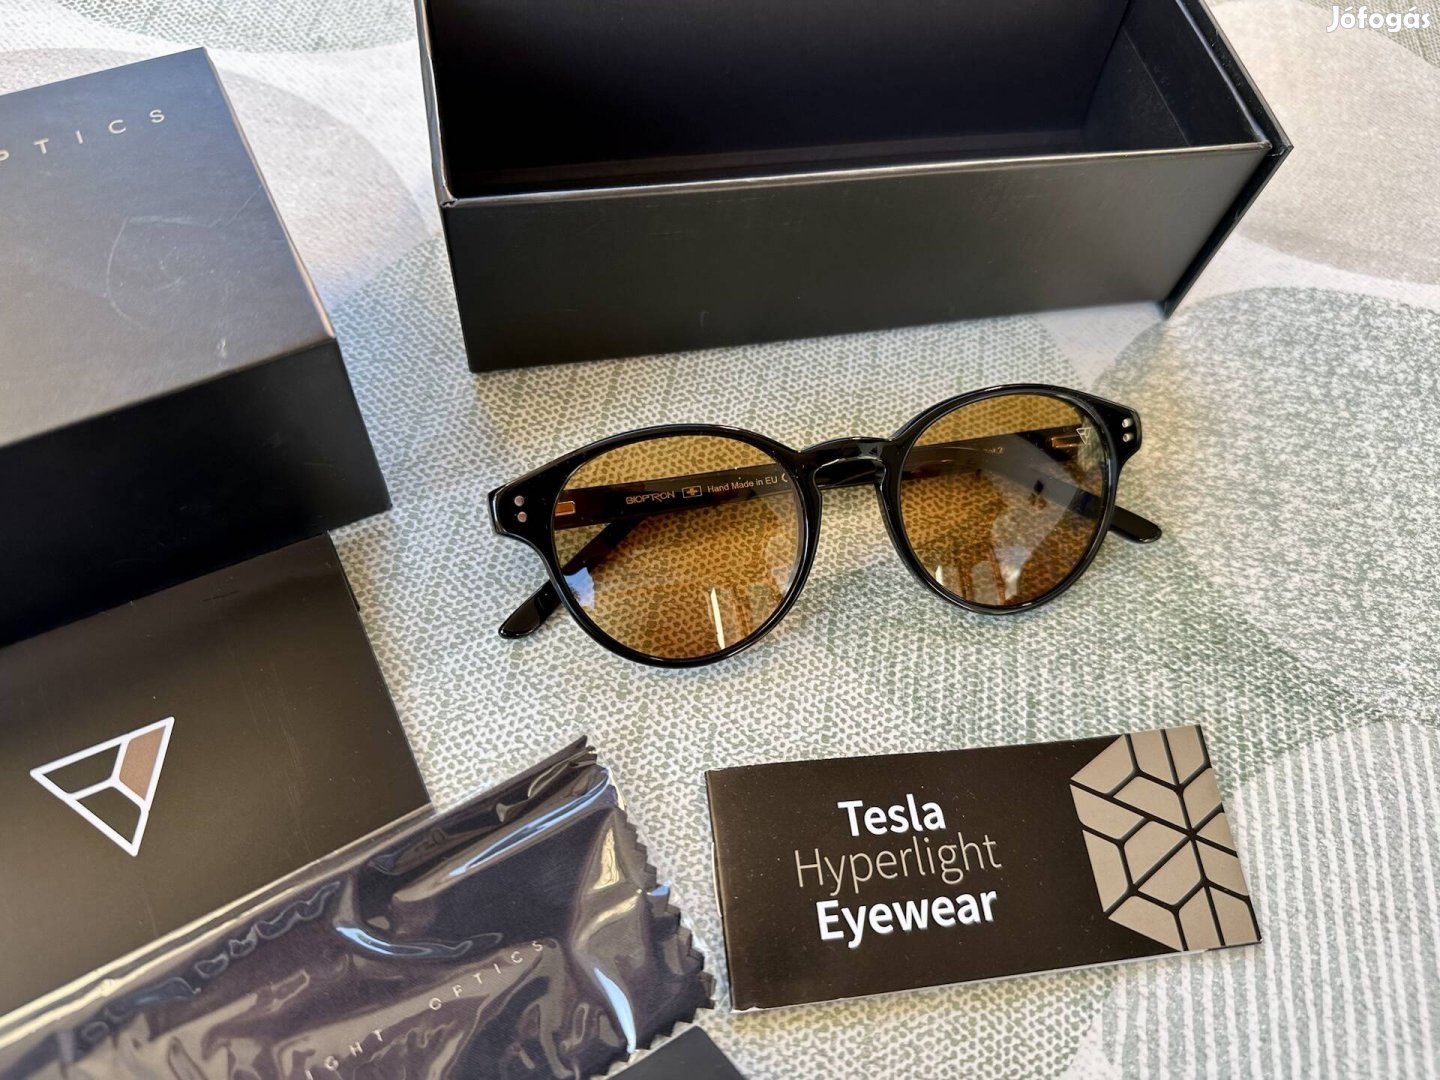 Vadonatúj Zepter bioptron Tesla Hyperlightwear szemüveg eladó!